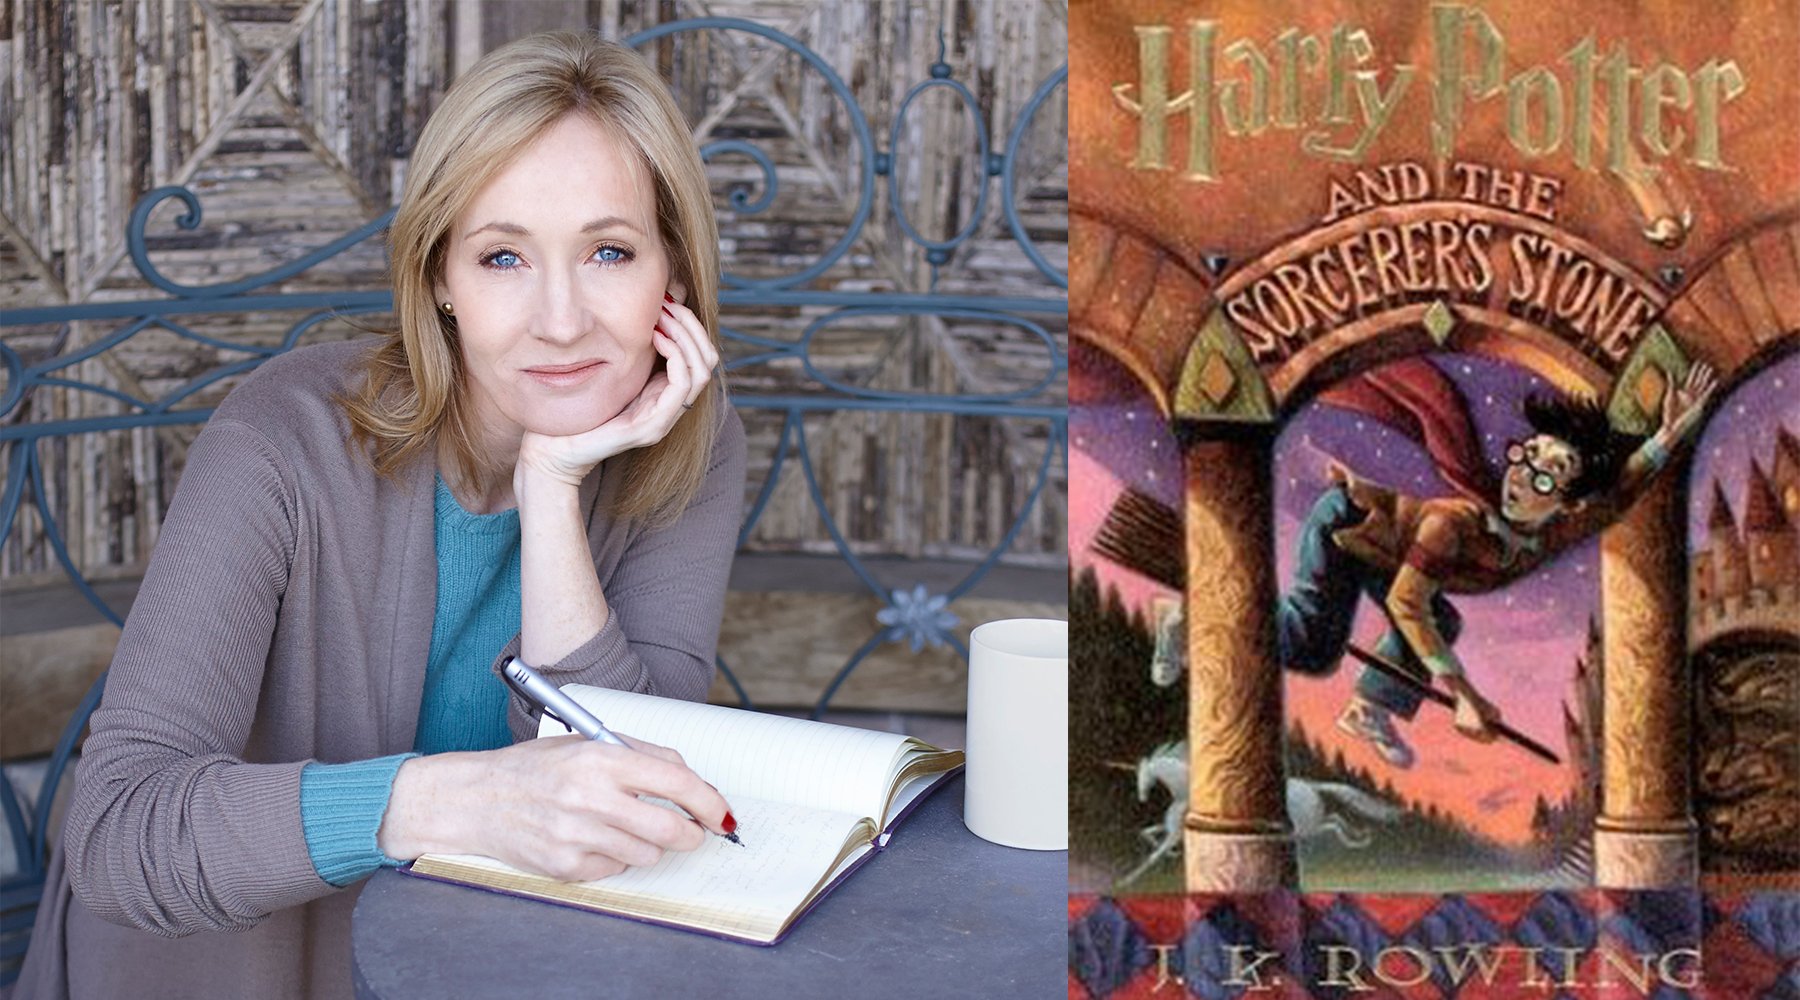 THE FANTASY PHILANTHROPIST: J.K. Rowling